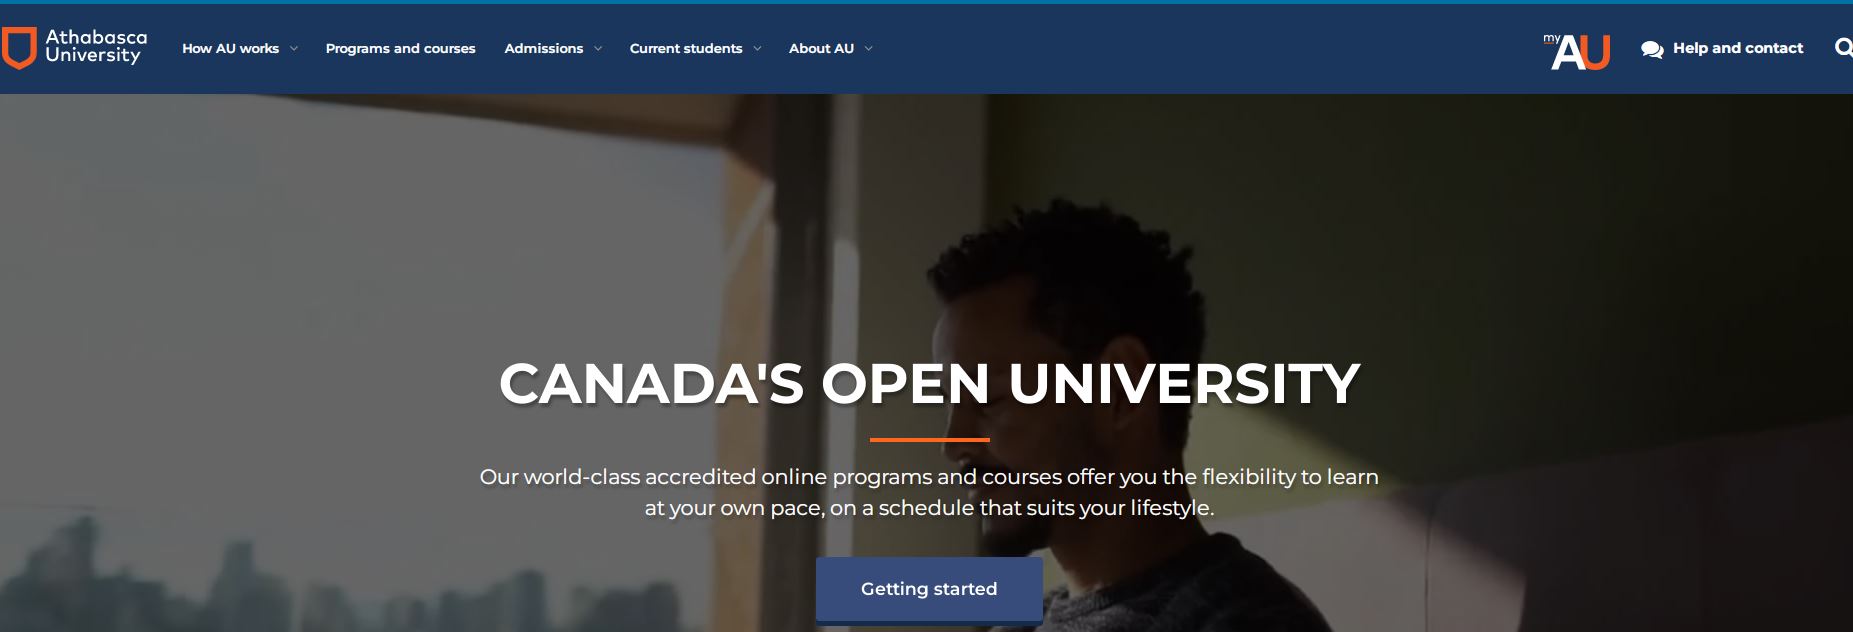 Athabasca University Graduate Programs- Homepage